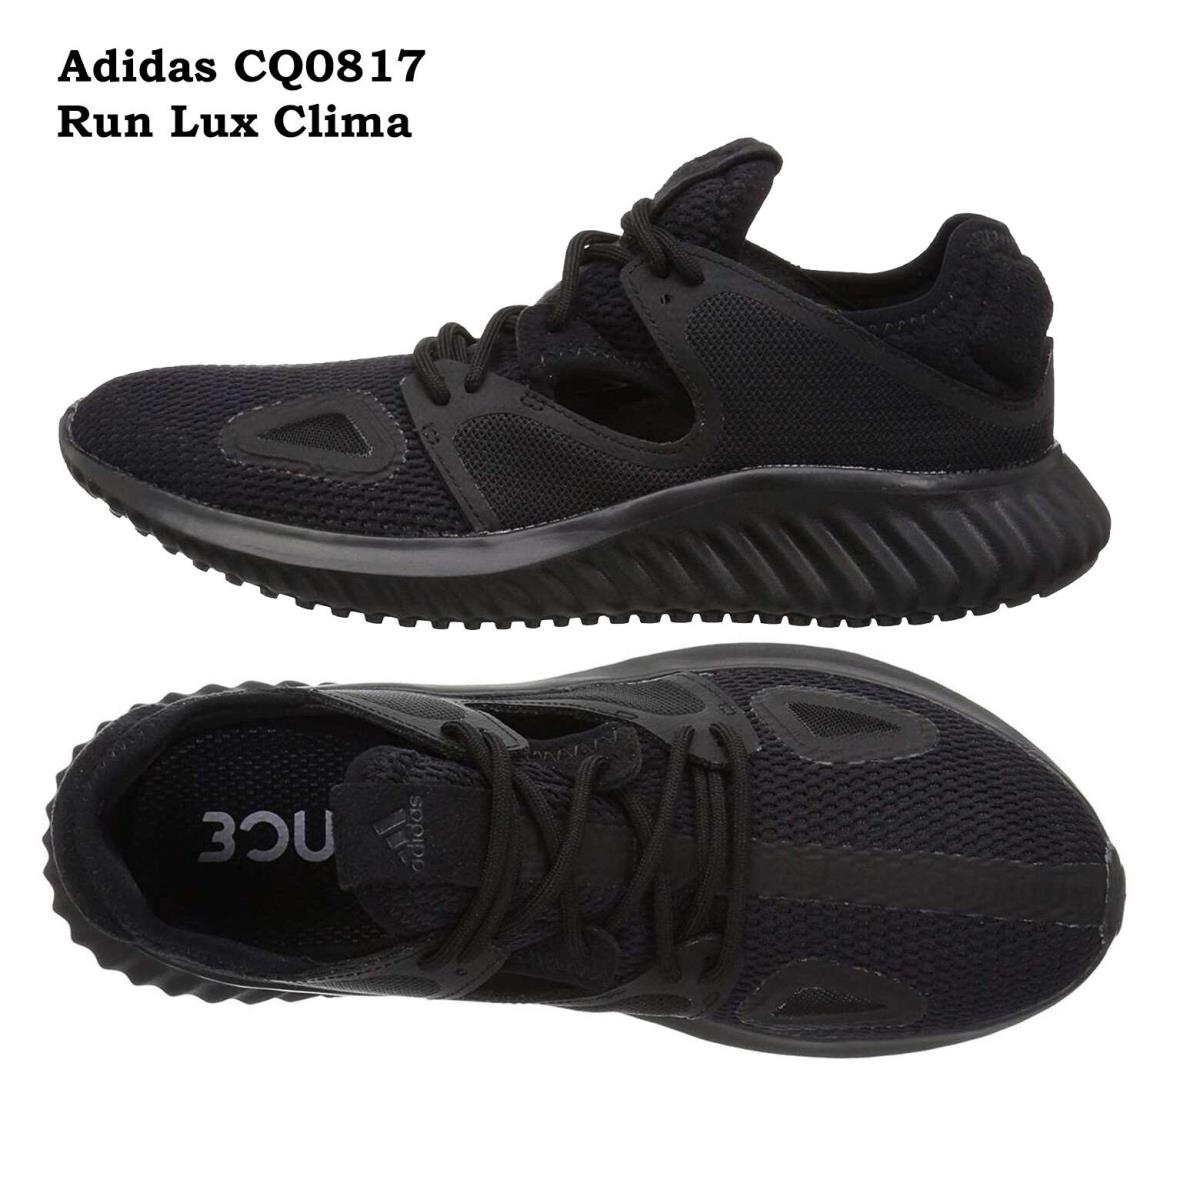 Women Adidas Shoes Black Run Lux Clima Running Shoes Adidas Bounce Series AQ0817 - Black